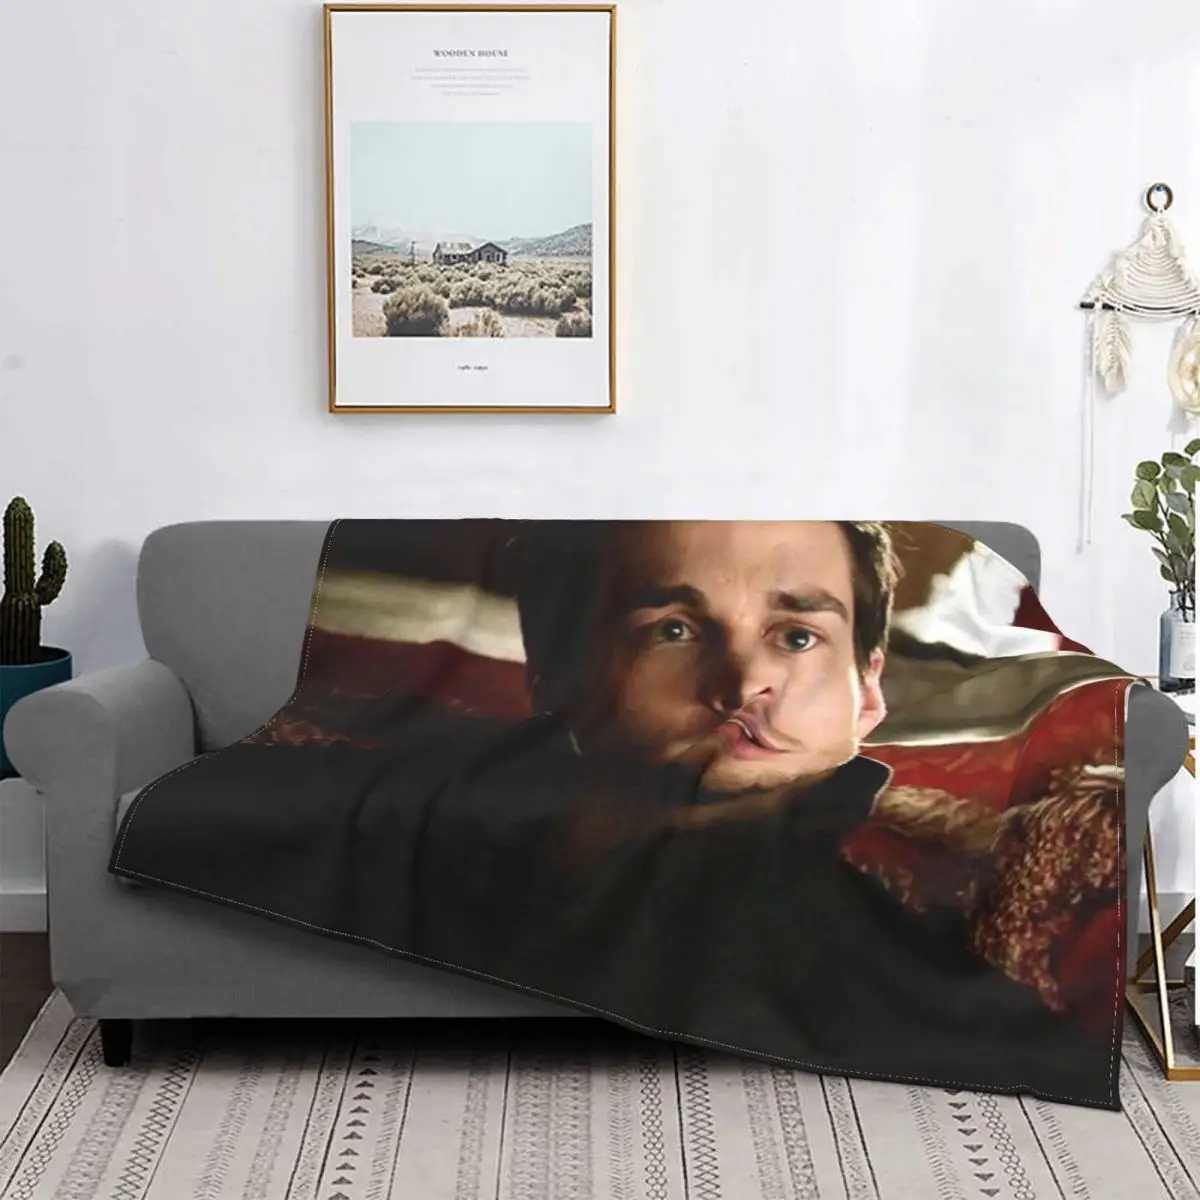 

Одеяло Kai Parker Дневники вампира Крис Вуд Фланелевое смешное теплое покрывало для кровати дивана осень/зима